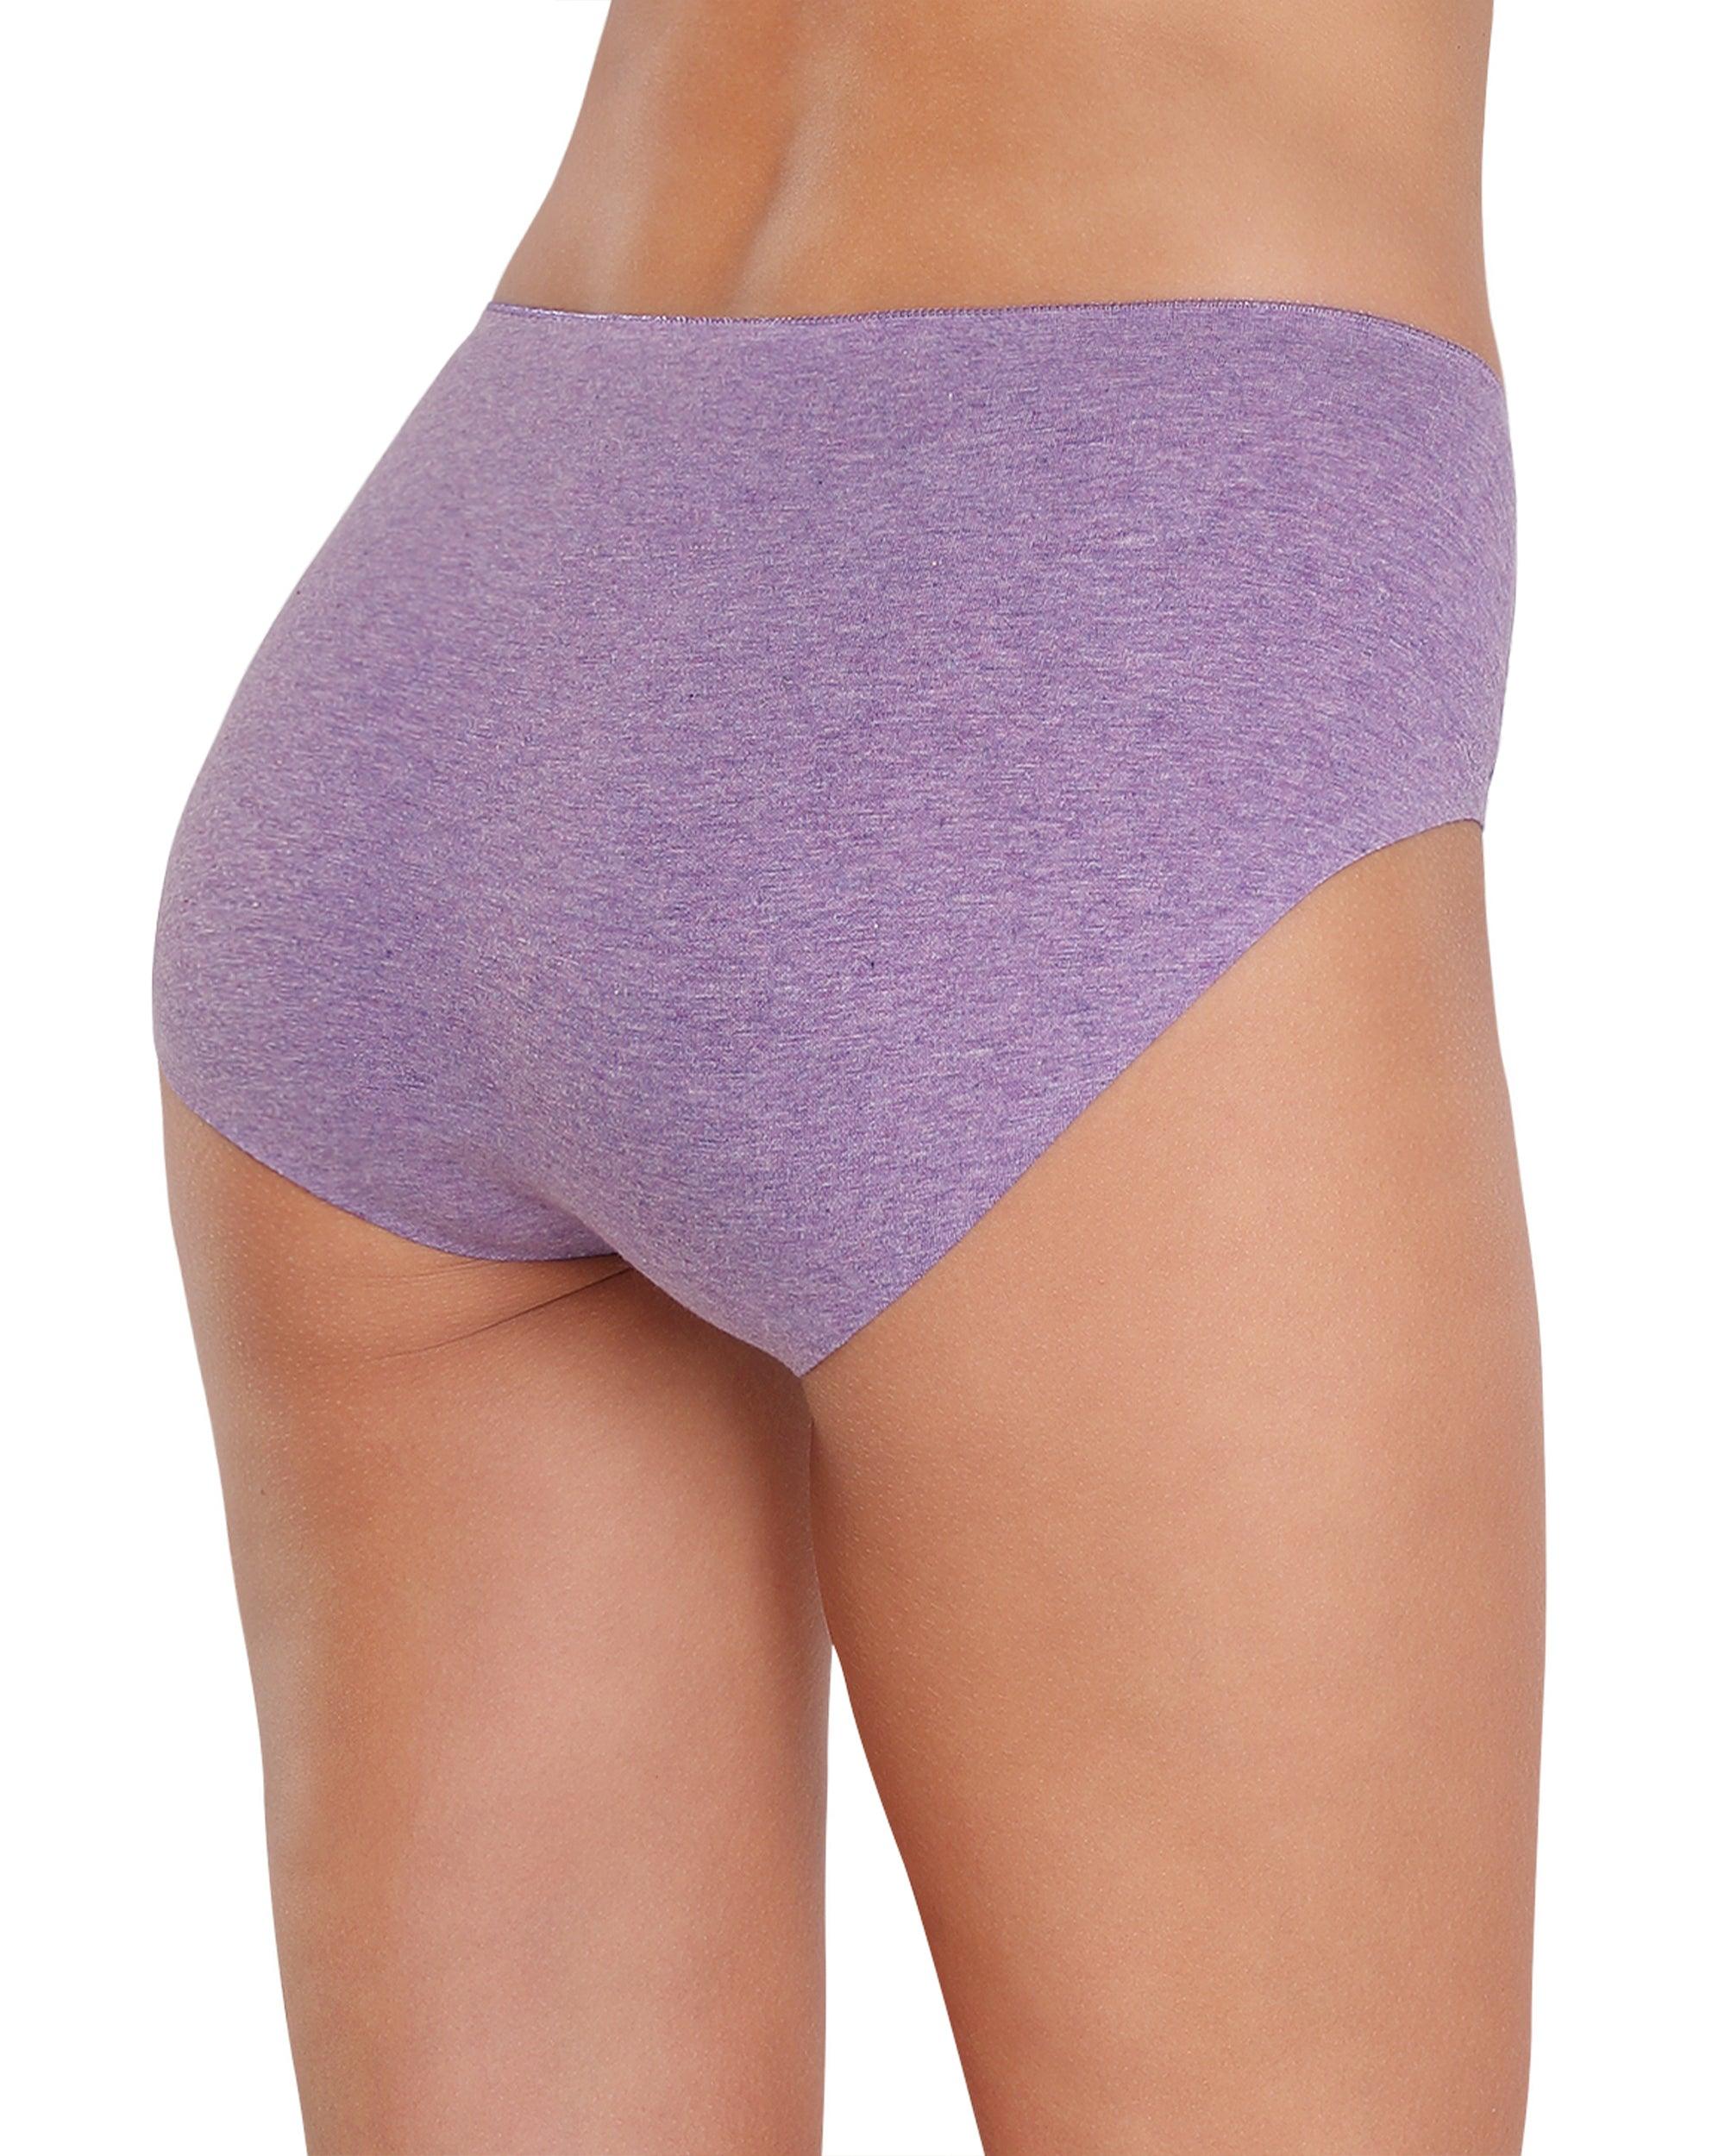 Buy MYYNTI Women's Seamless Cotton Panties Underwear Briefs Ladies